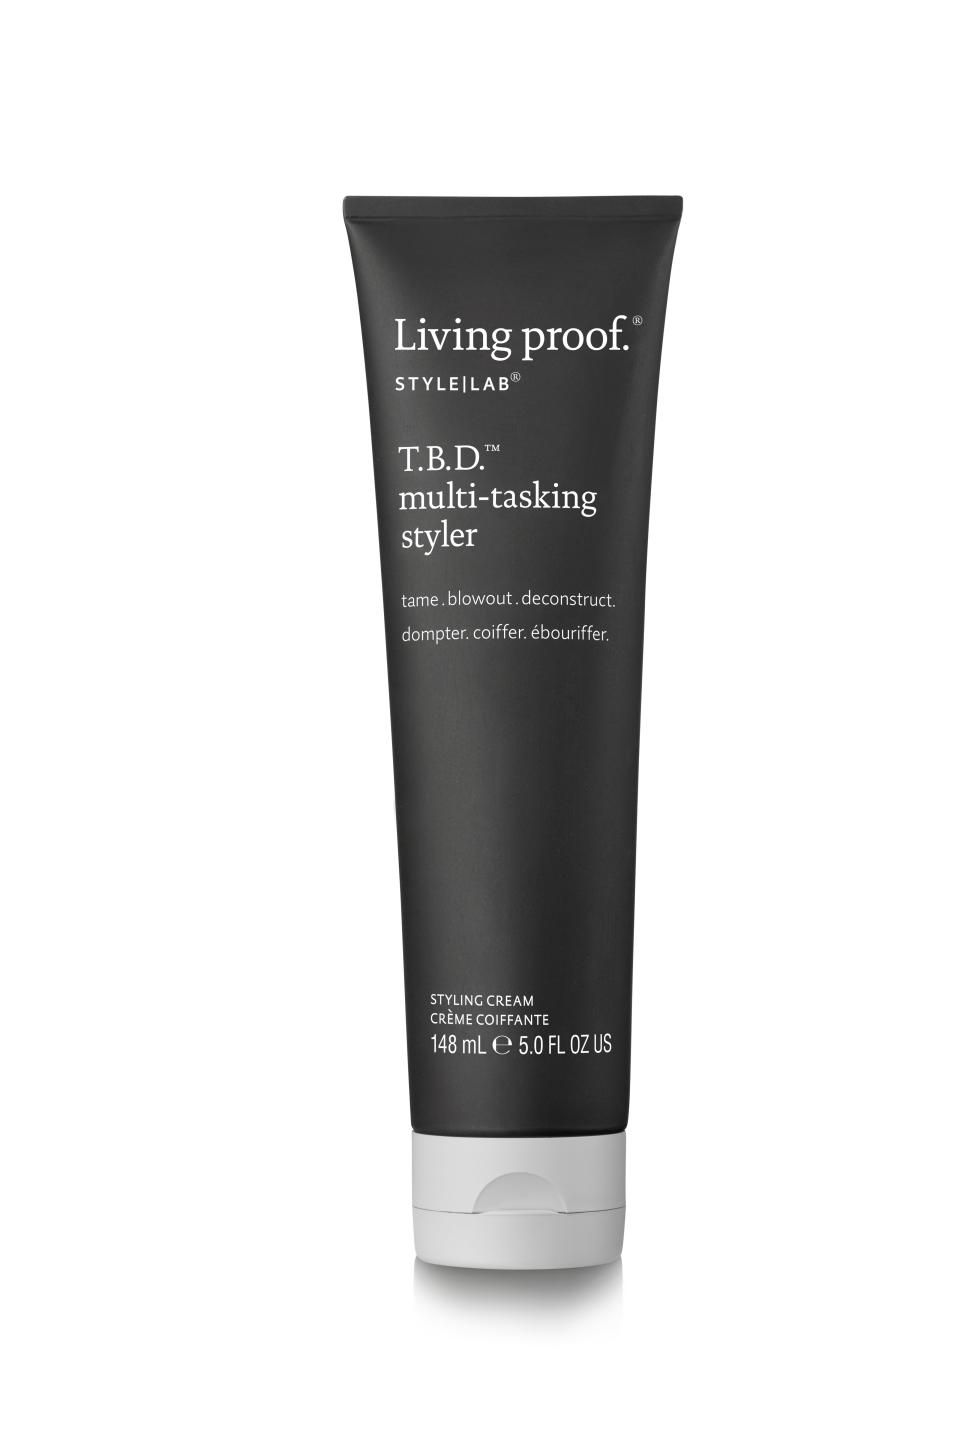 Living Proof Style Lab T.B.D. Multi-Tasking Styler, $26